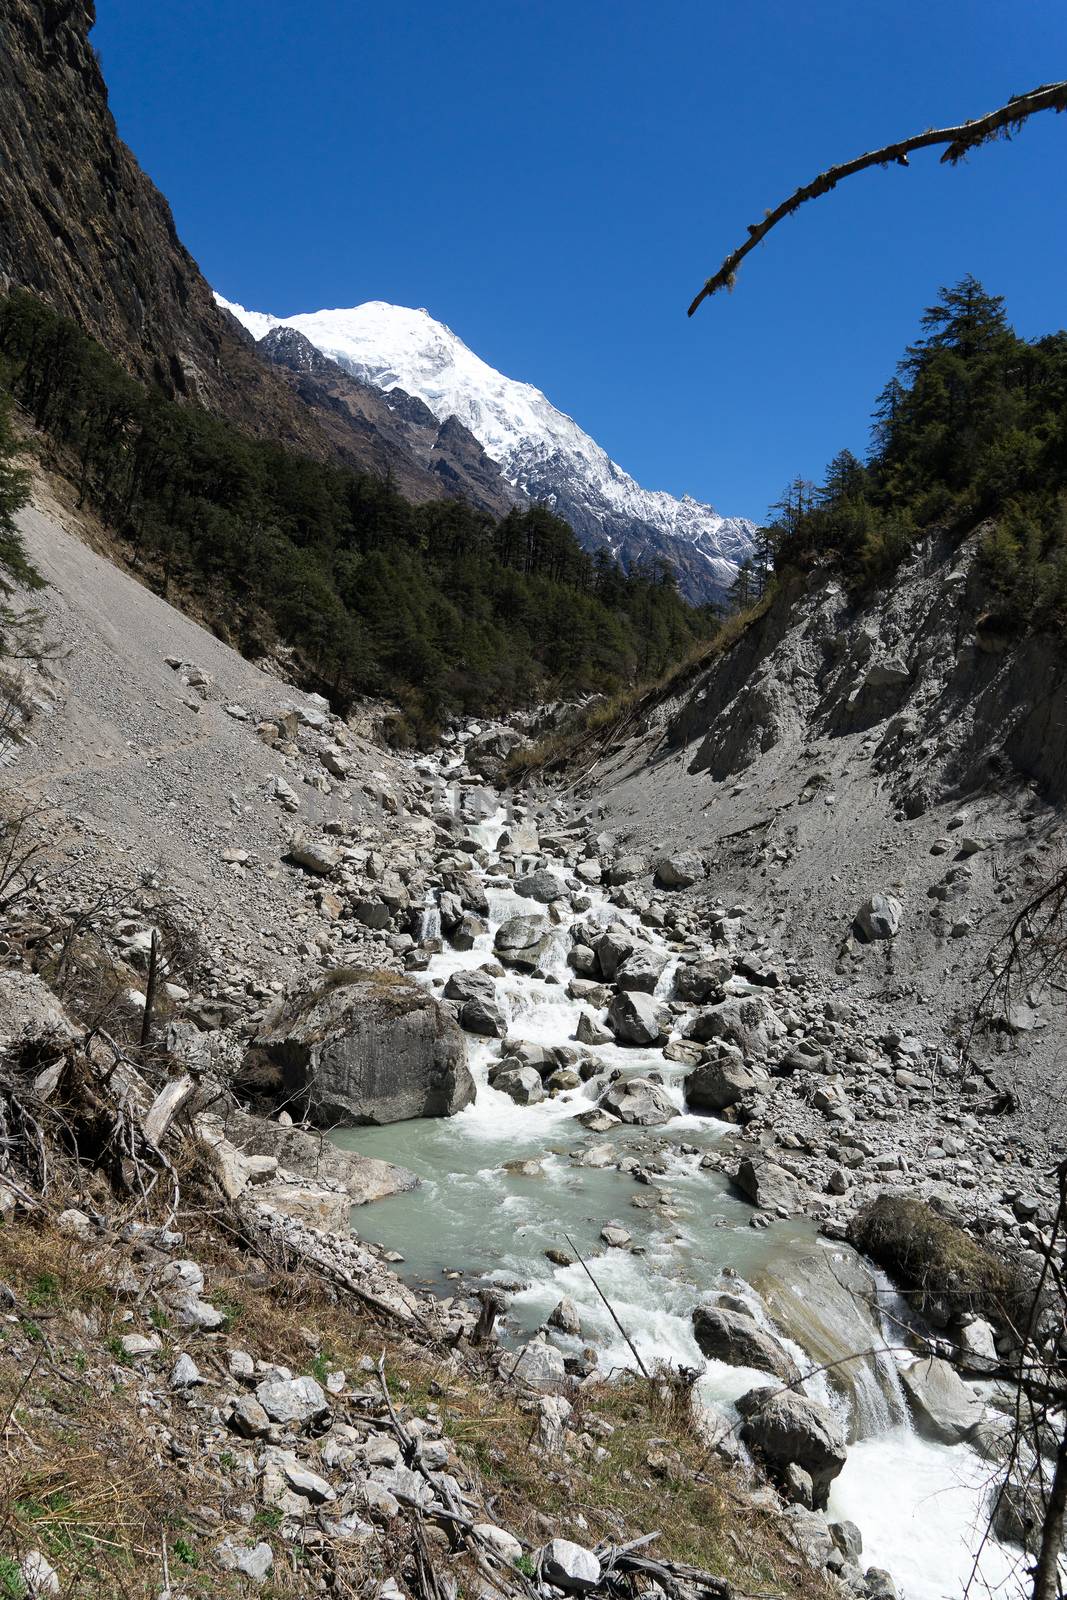 Mountain river in Nepal Himalaya by javax